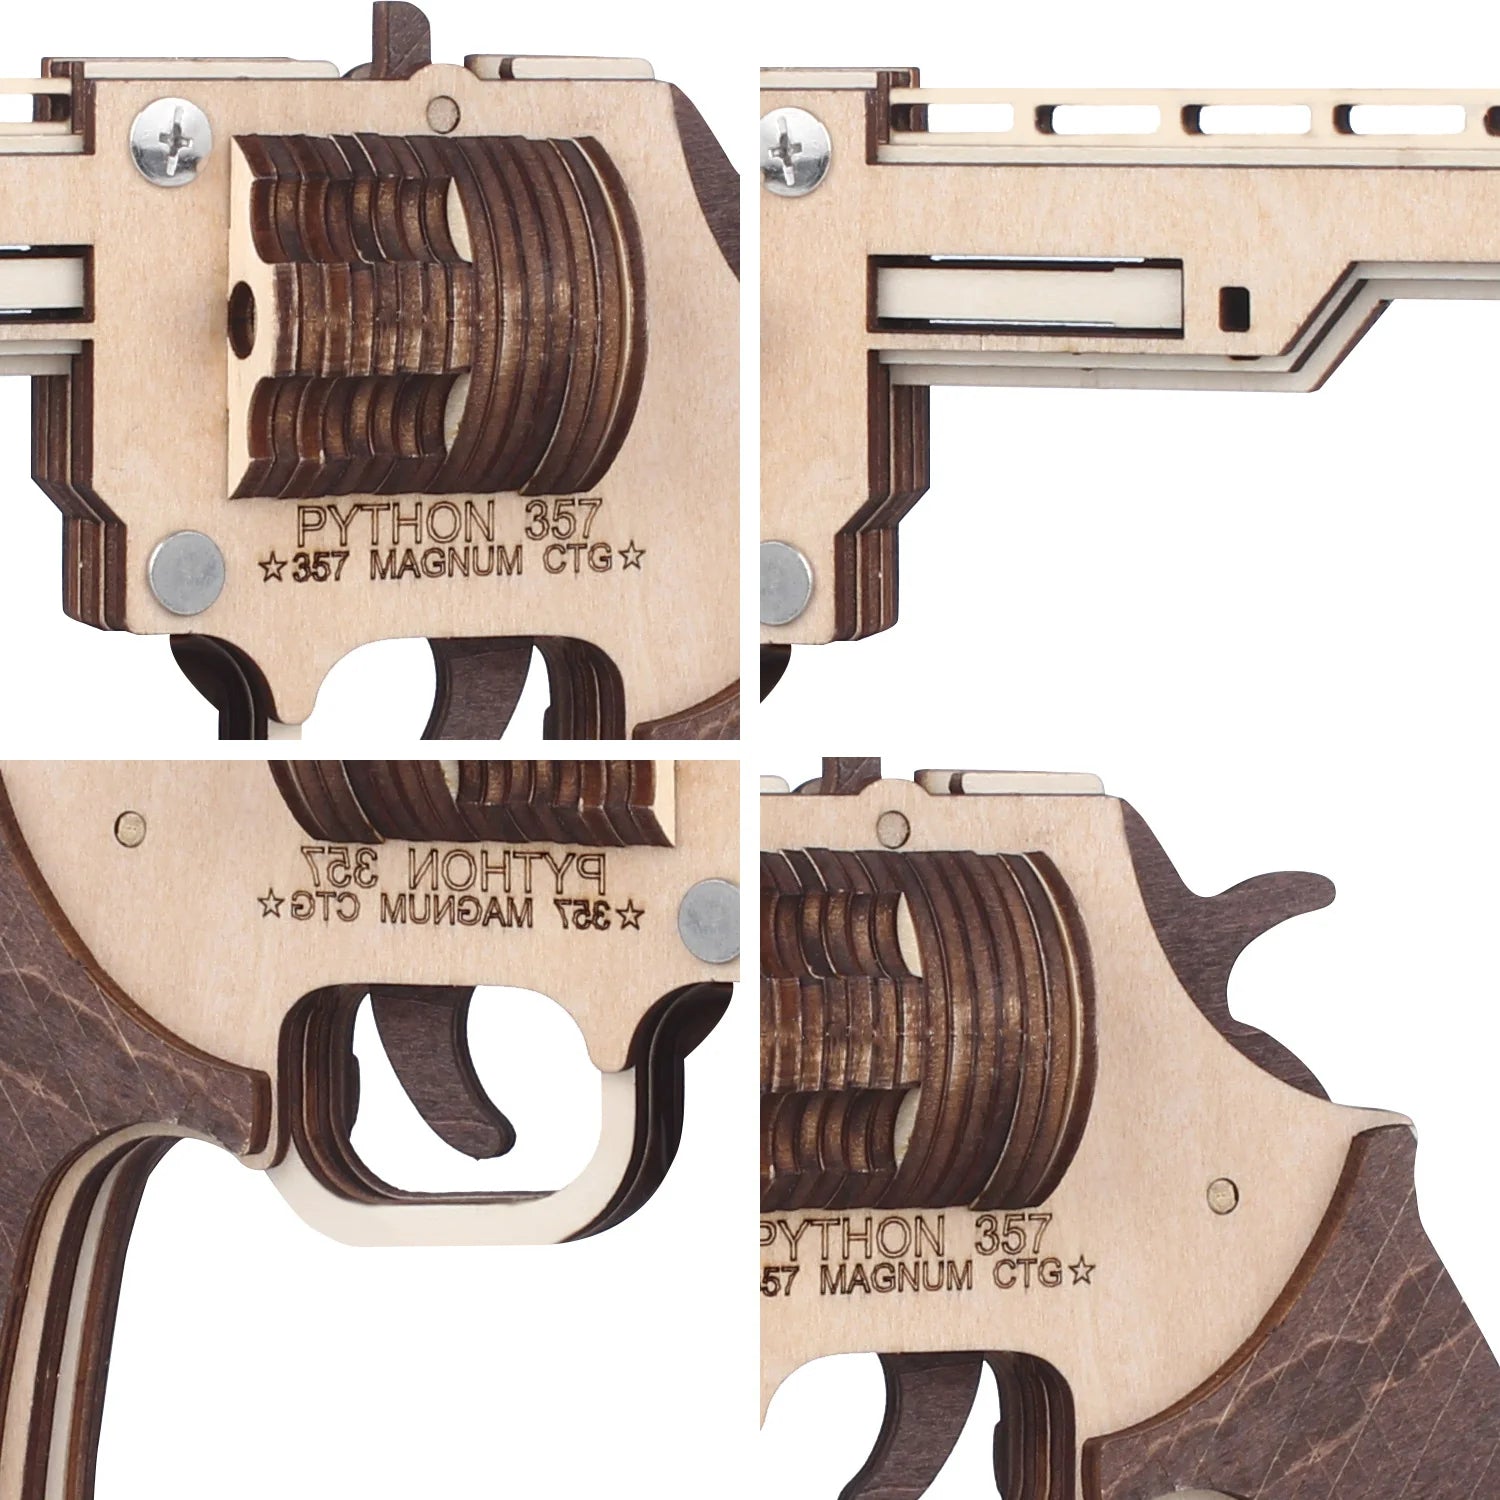 3D Revolver Rubber Band Gun Wooden Puzzle